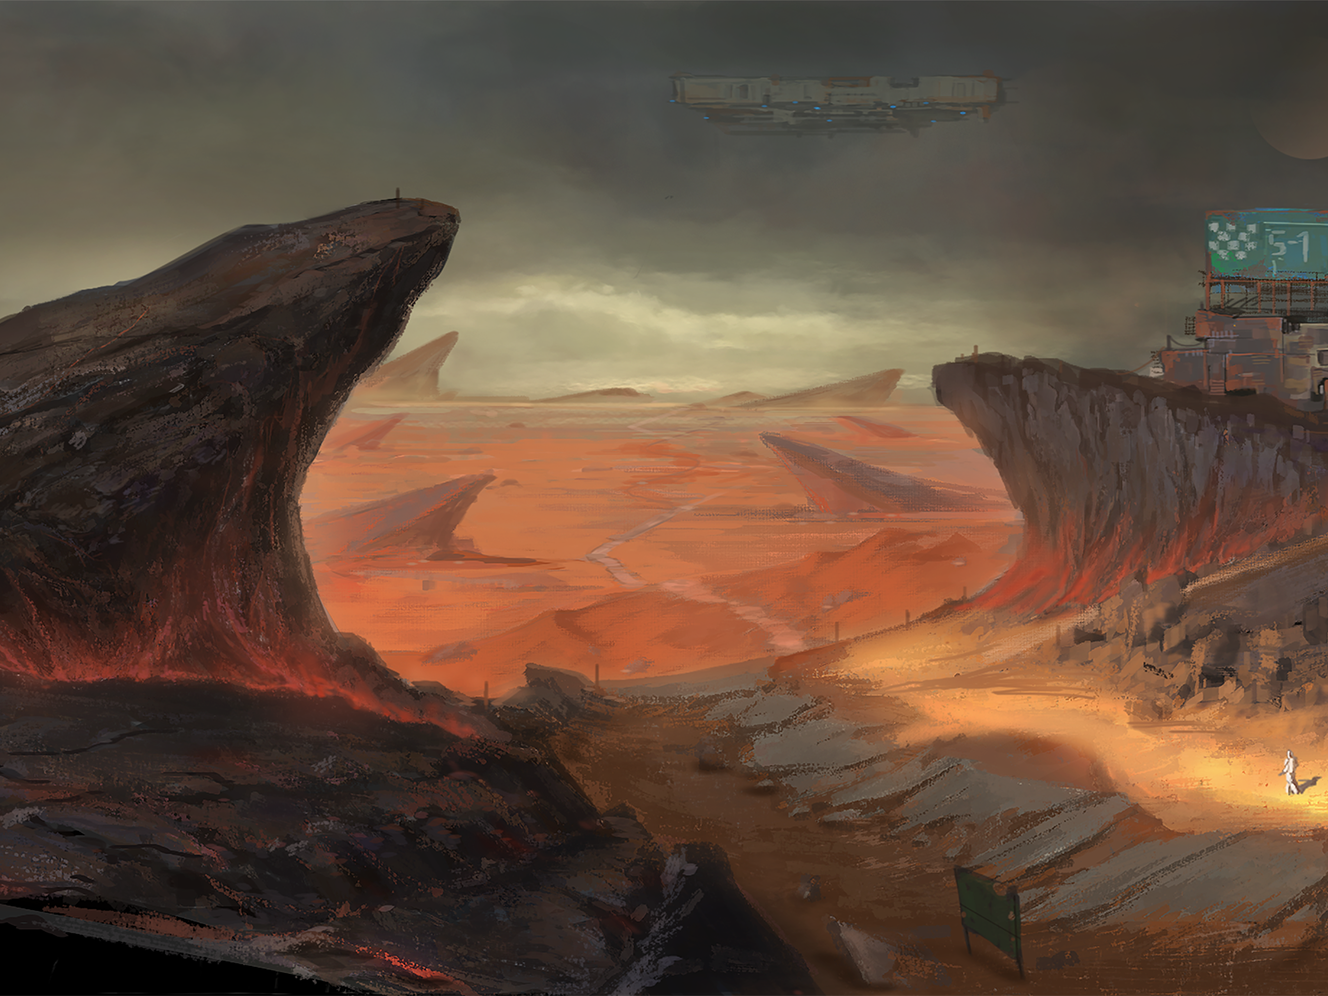 Black Mountain Desert Concept Art by Game Development student Weiyi Qin